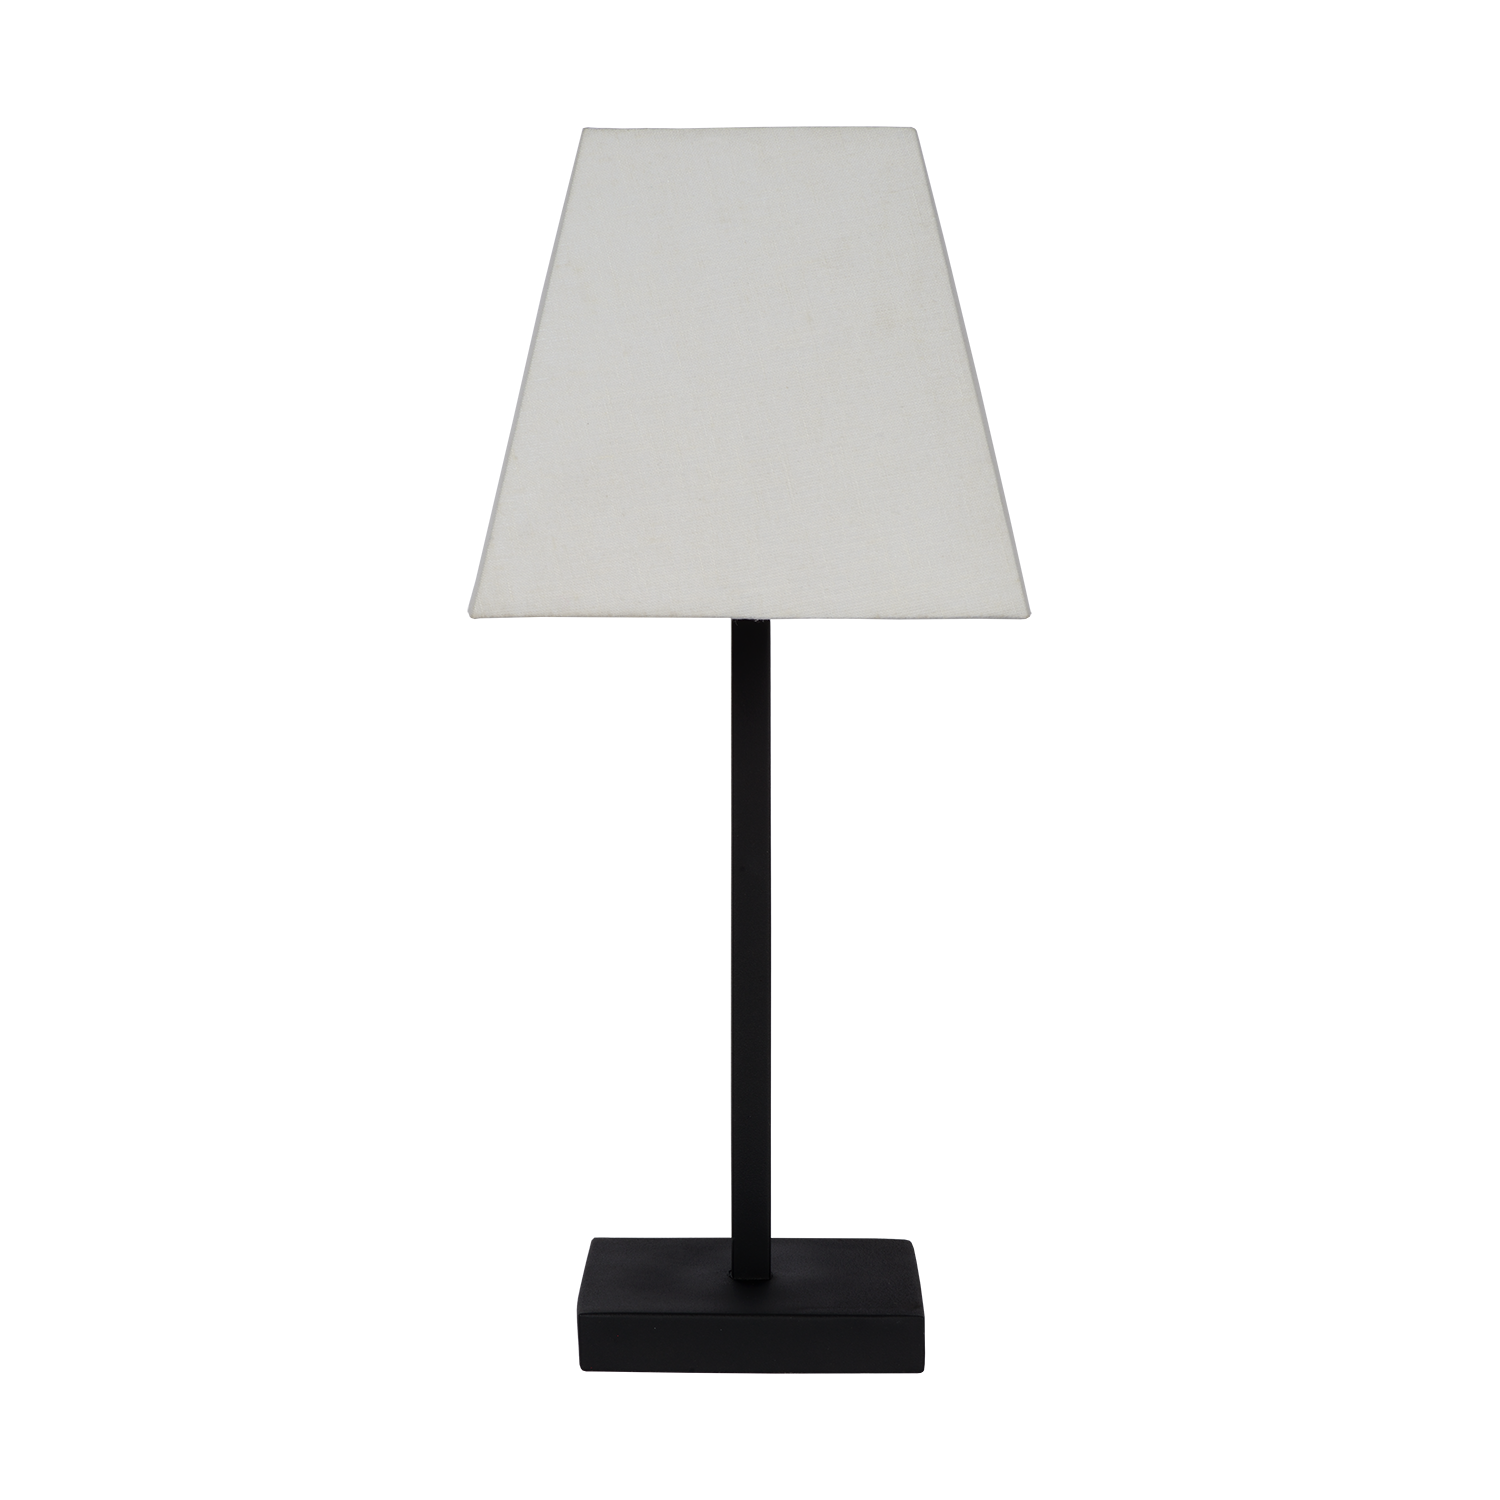 Table lamp Buranella